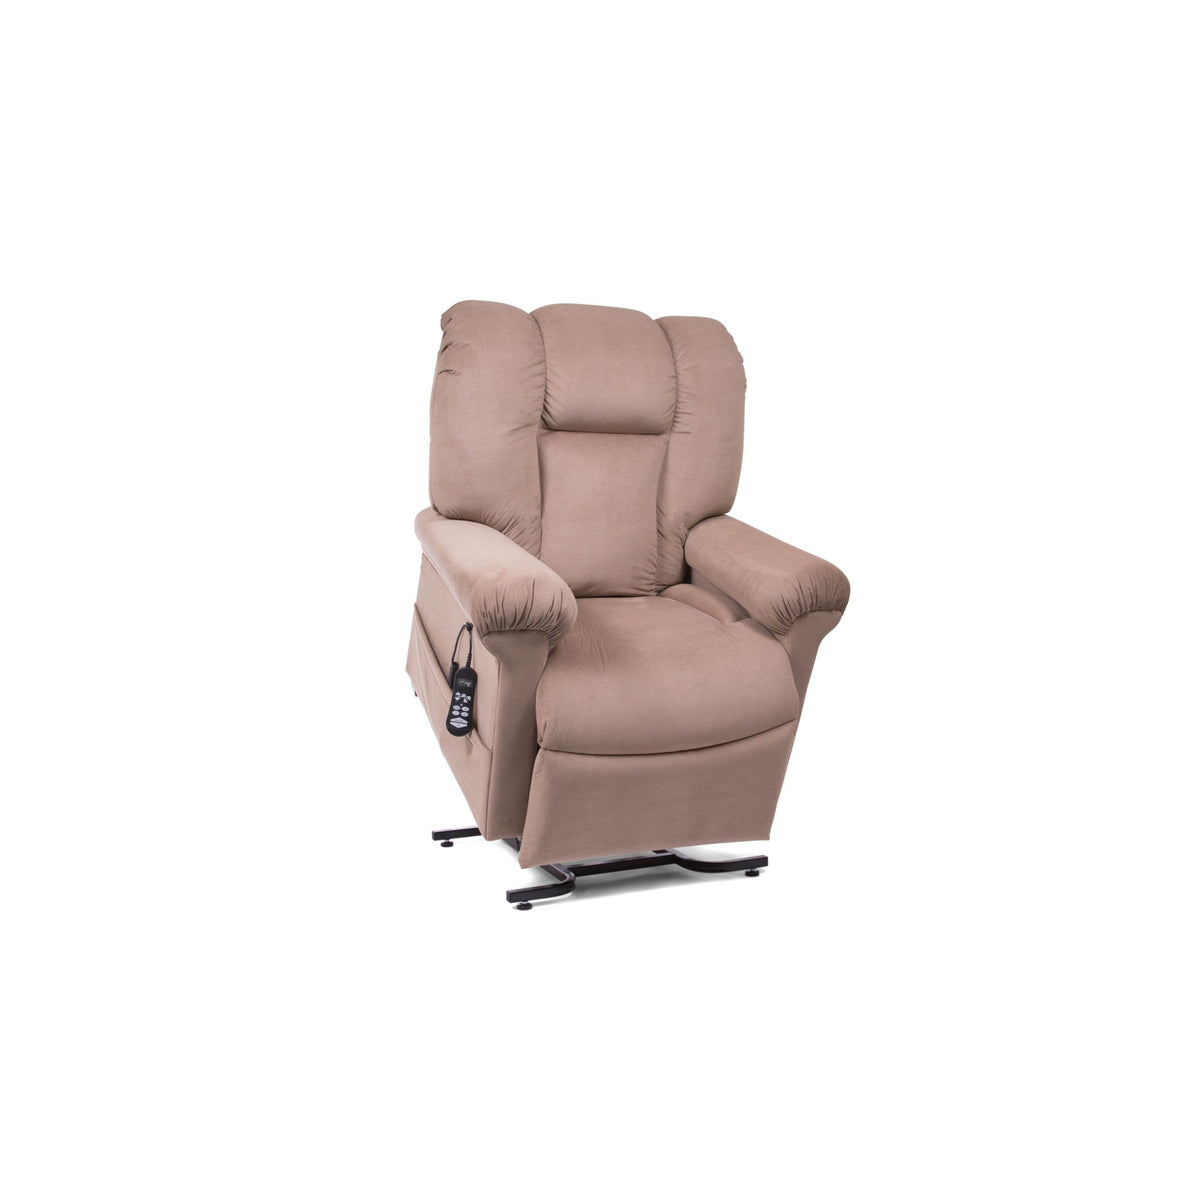 UltraComfort Artemis Power Lift Chair Recliner